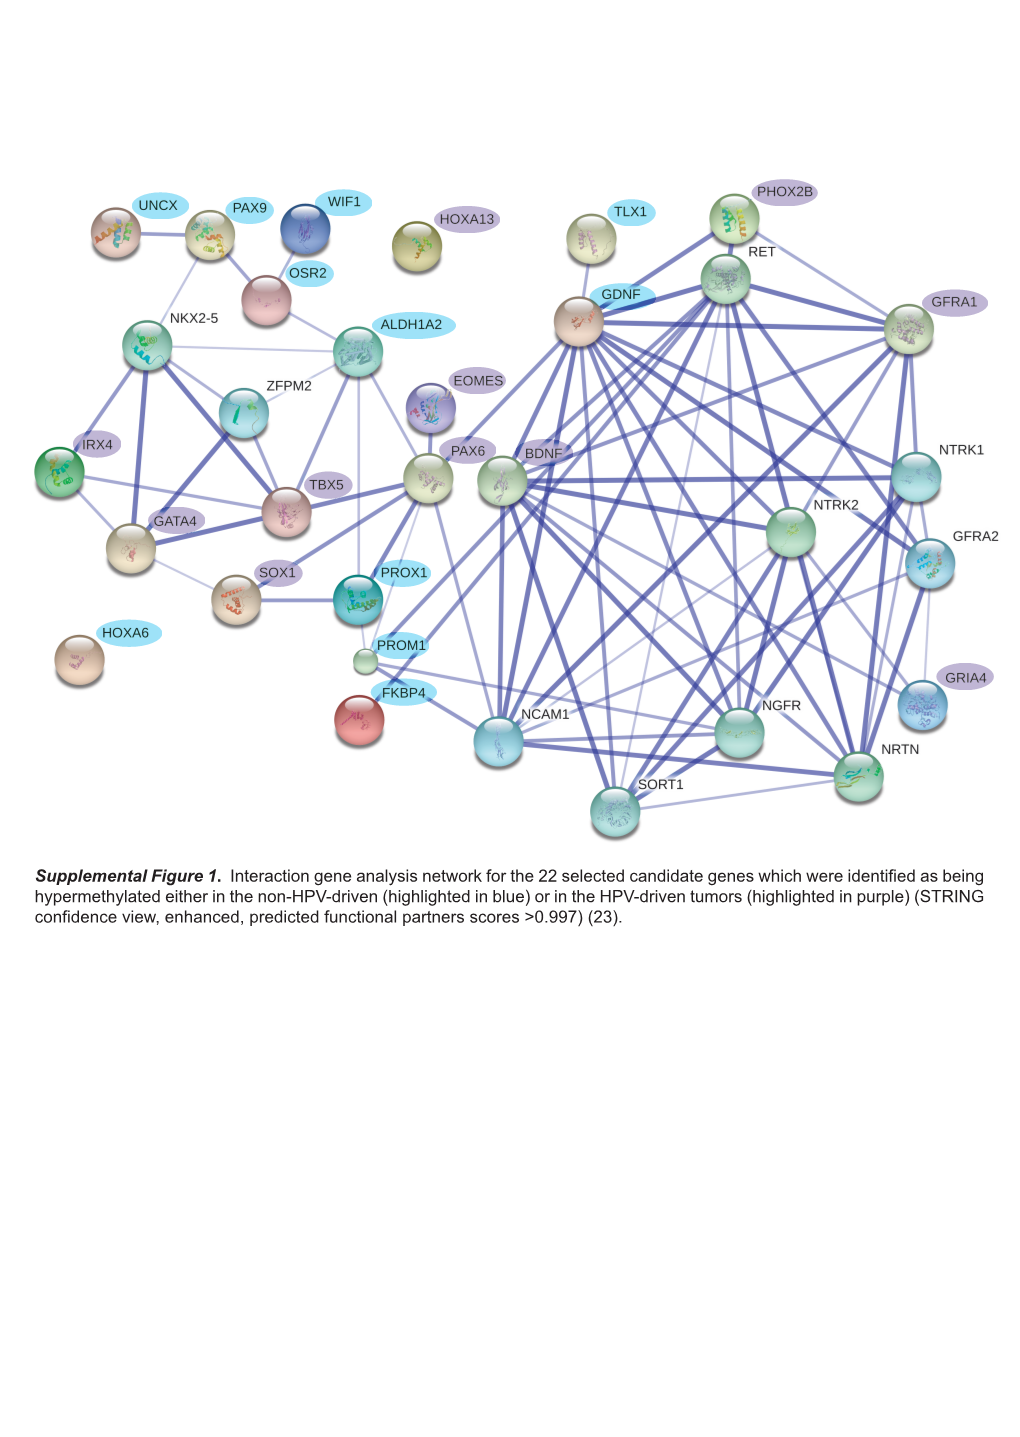 Supplemental Figure 1. Interaction Gene Analysis Network For